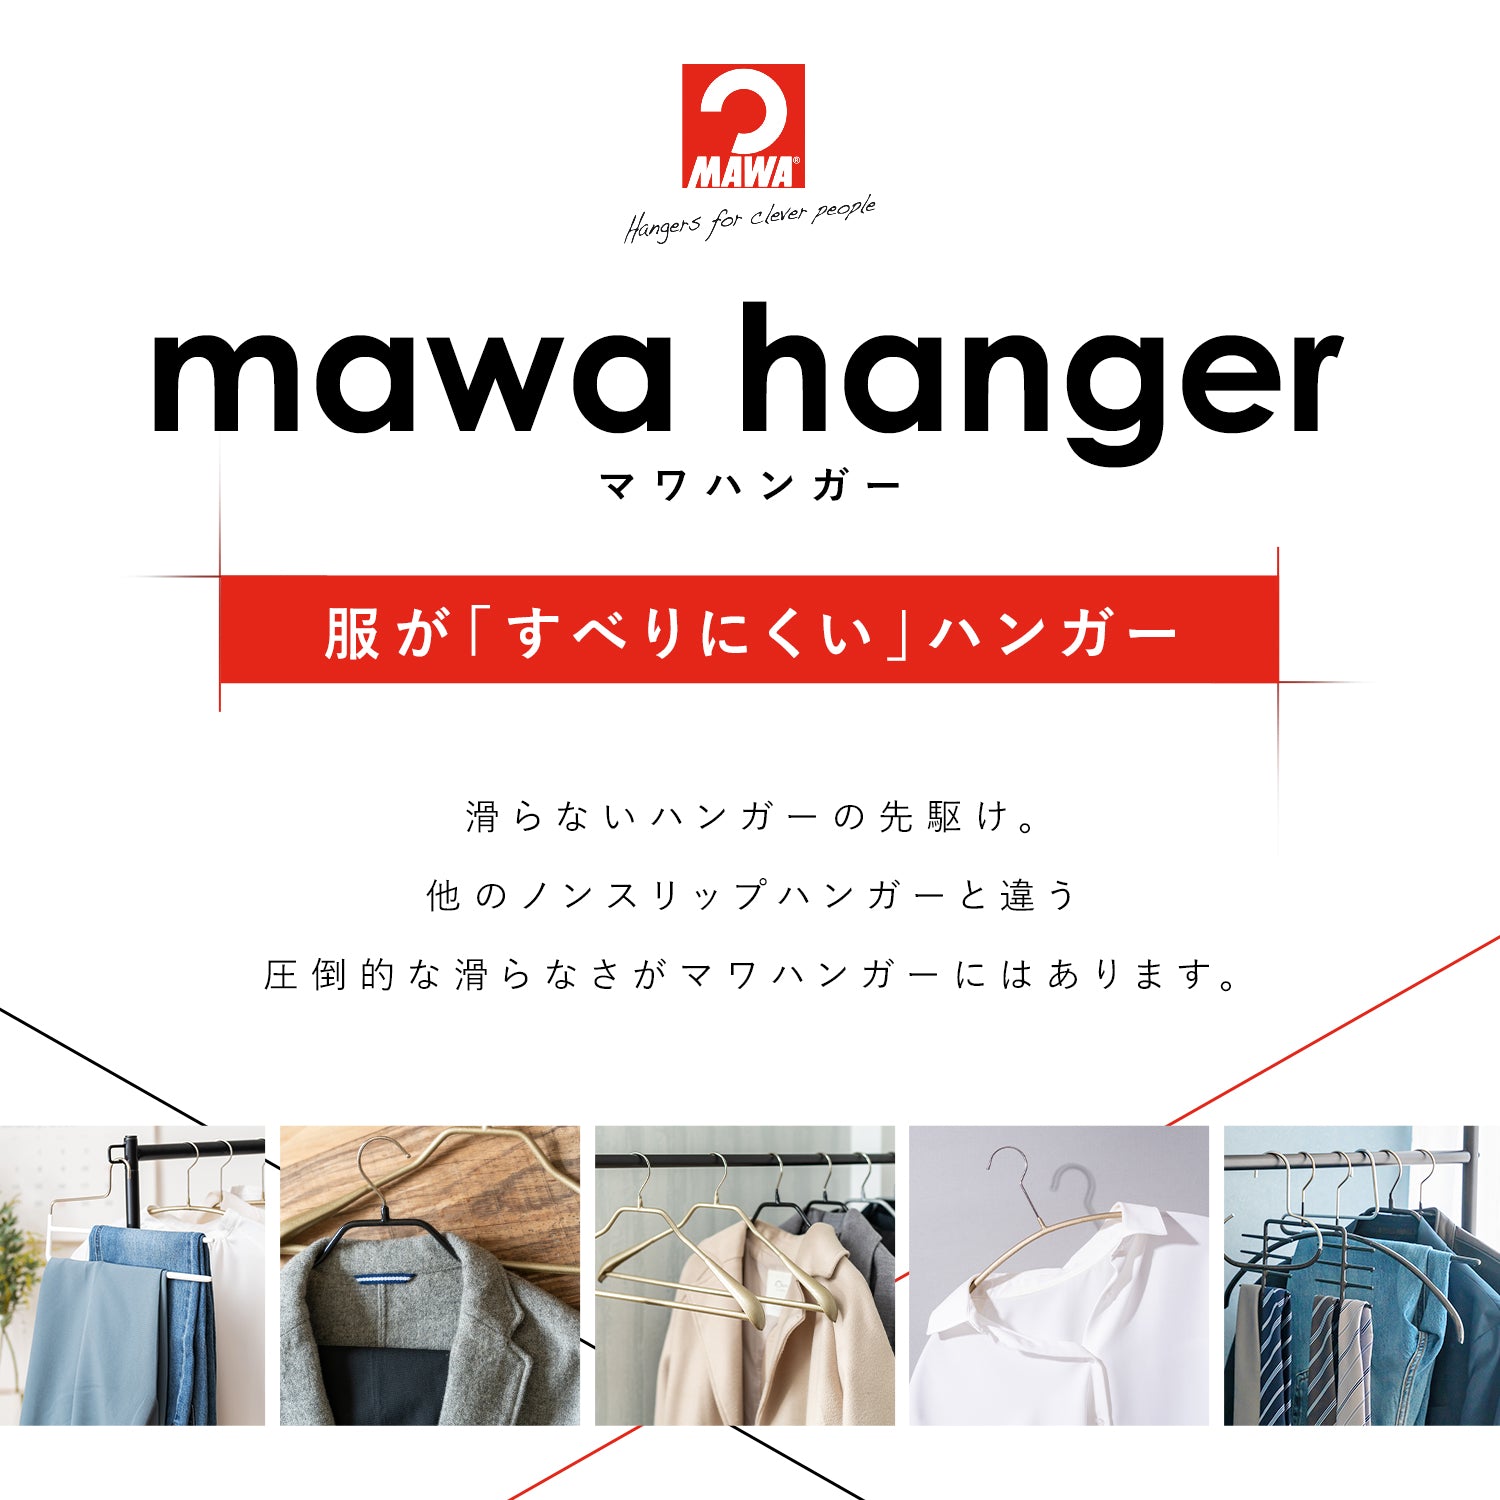 MAWAハンガー(マワハンガー) 【5530】ポリクリップ10個セット  【正規品】